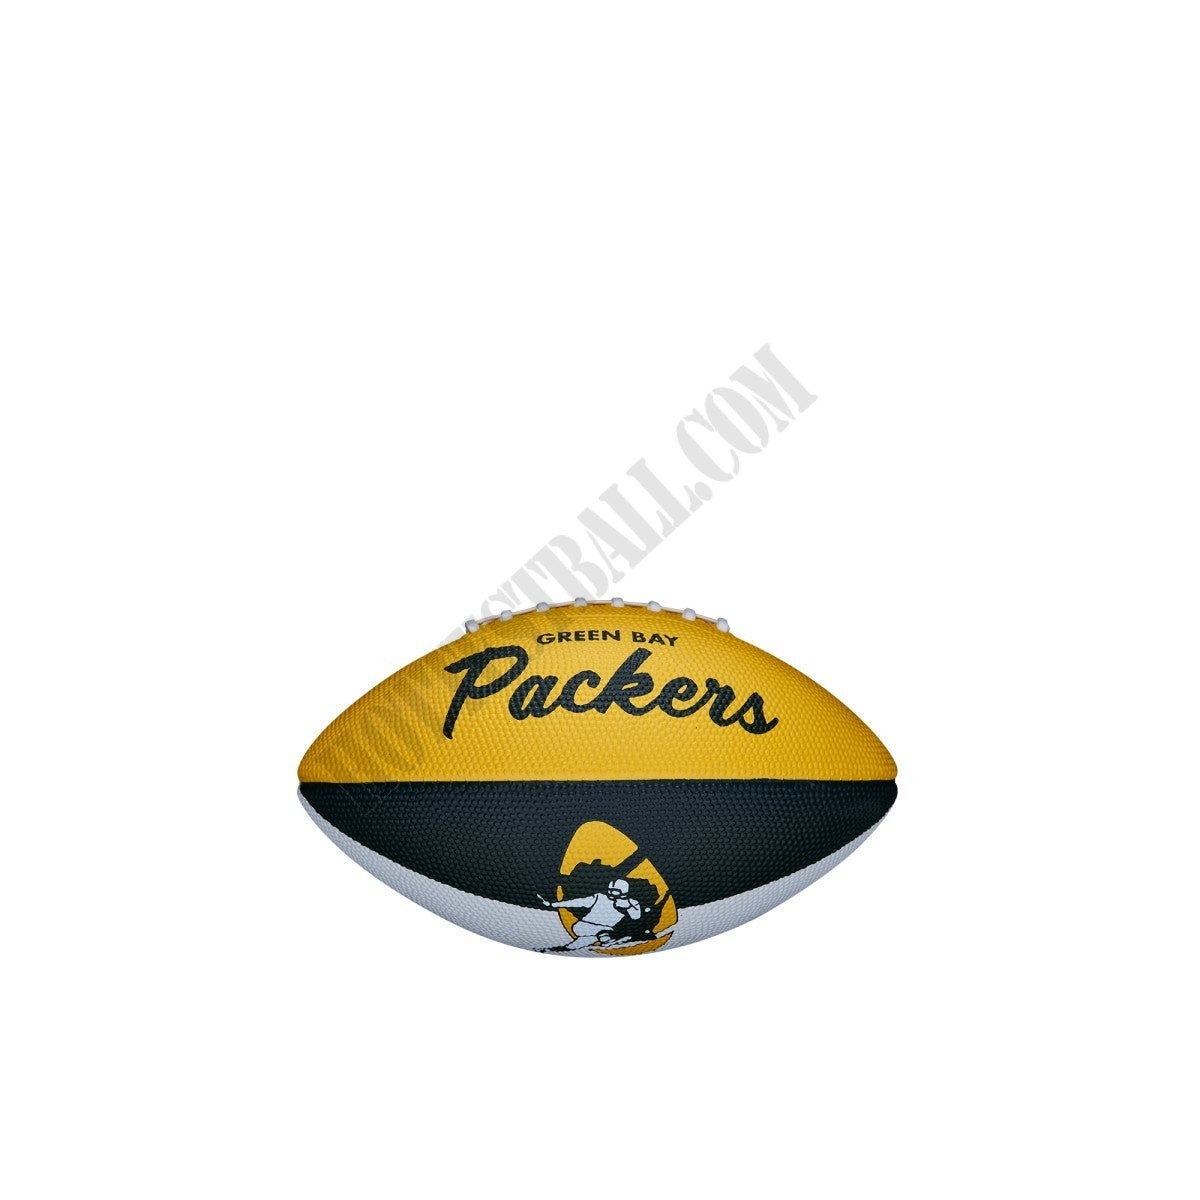 NFL Retro Mini Football - Green Bay Packers ● Wilson Promotions - -4